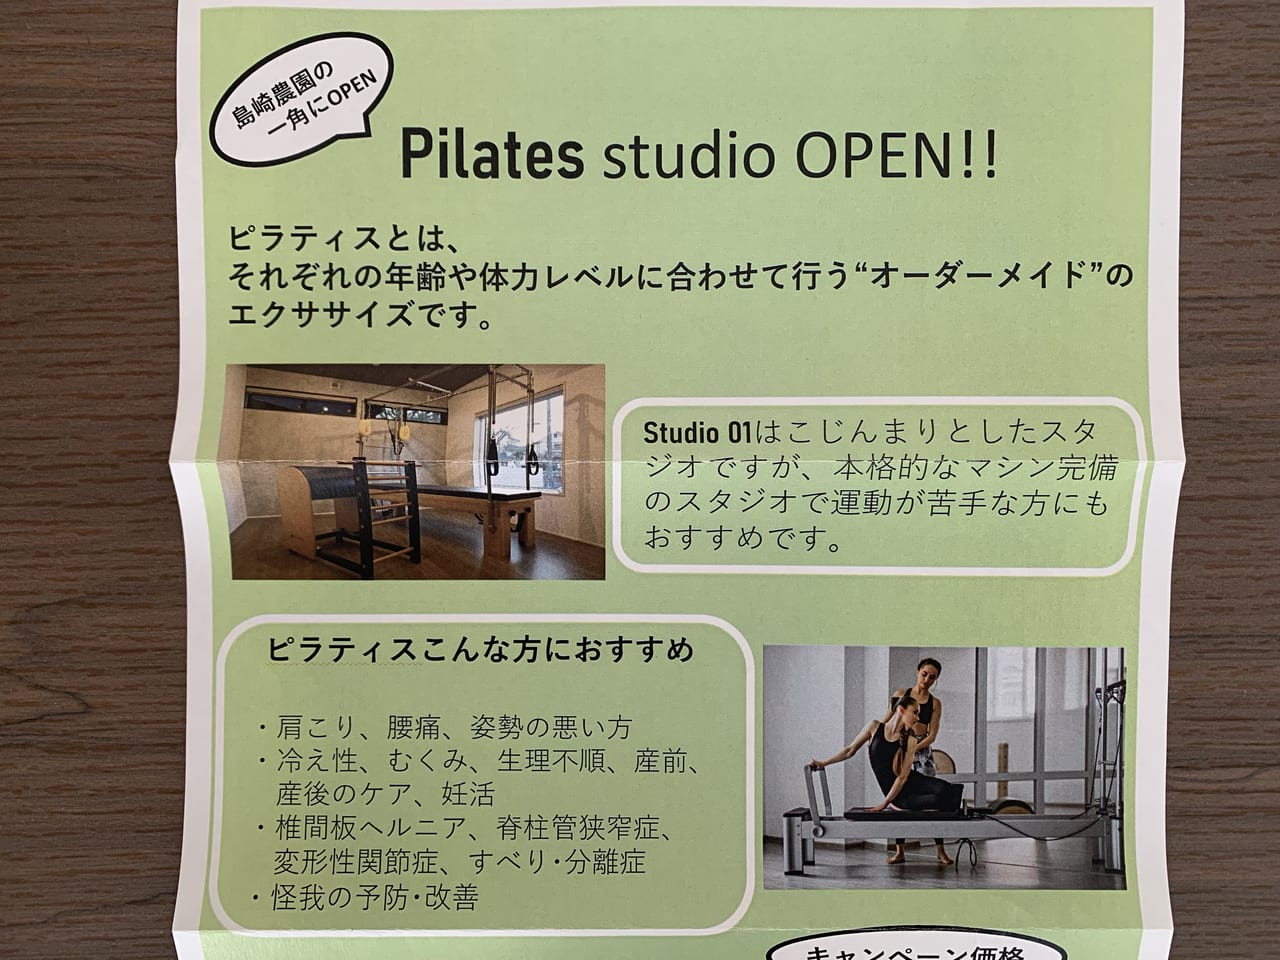 studio 01 PILATES　オープン